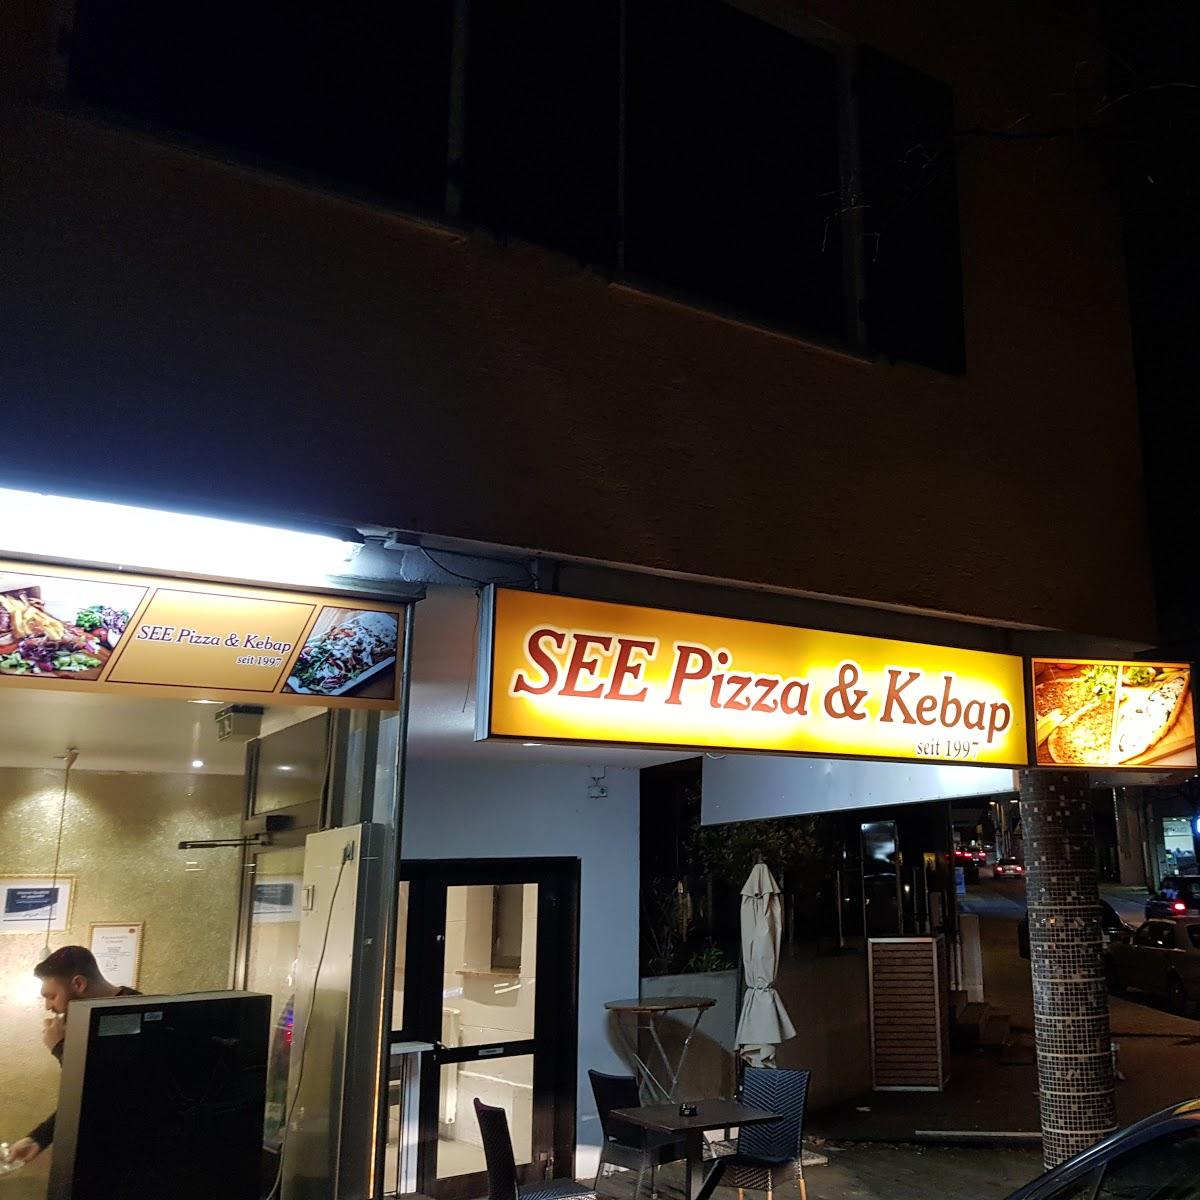 Restaurant "See Pizza & Kebap" in Böblingen